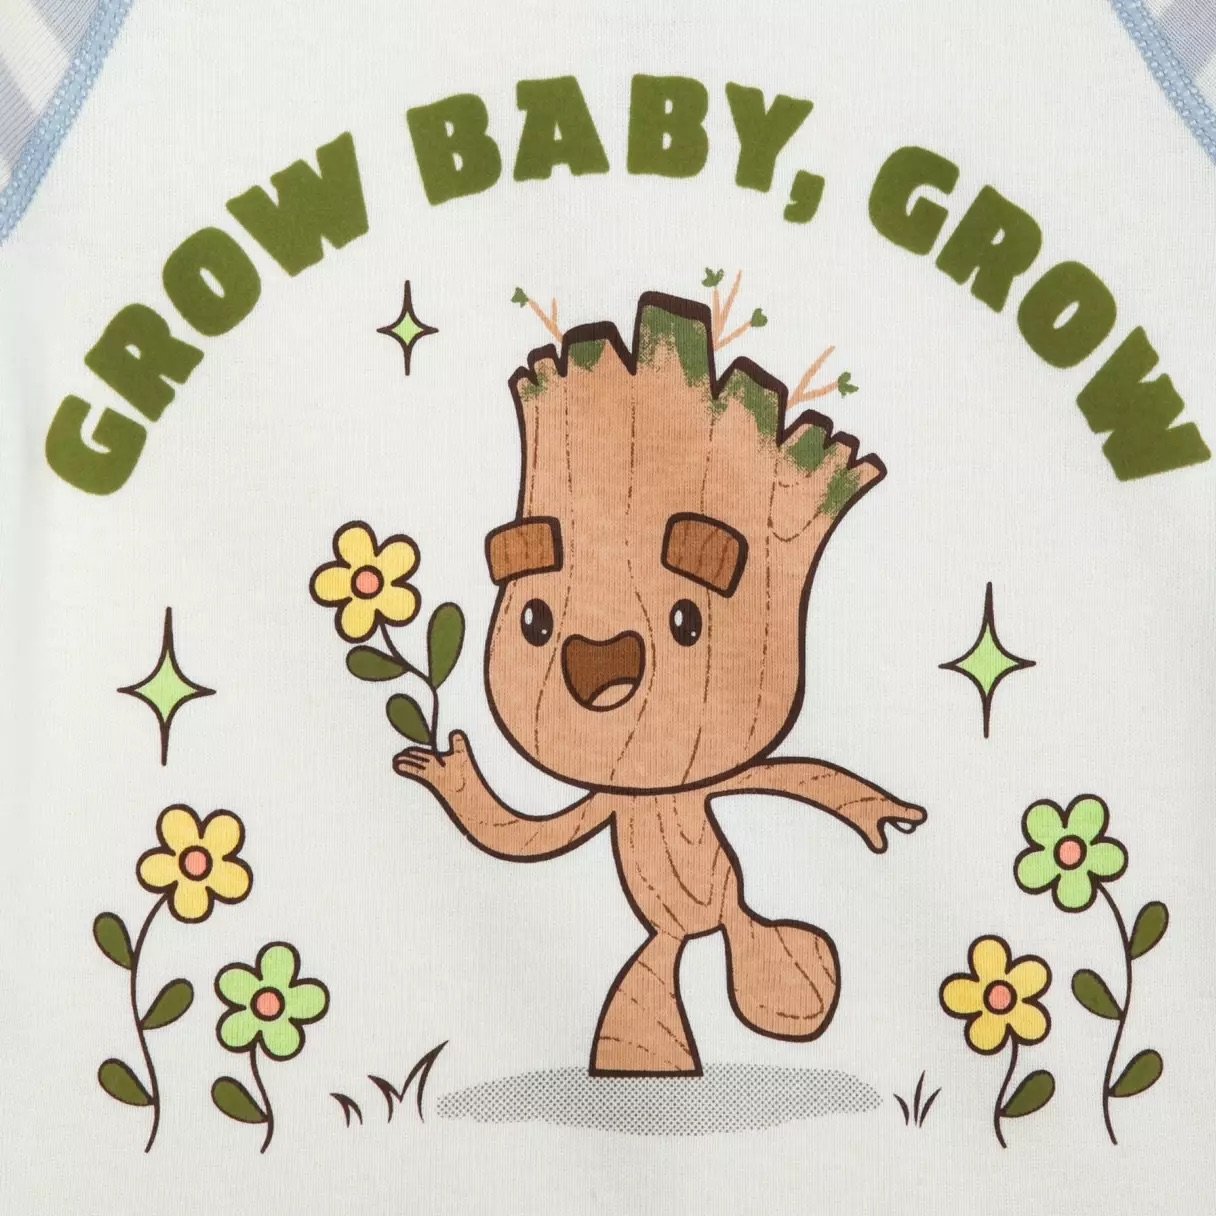 Kids "Grow Baby, Grow" PJ PALS